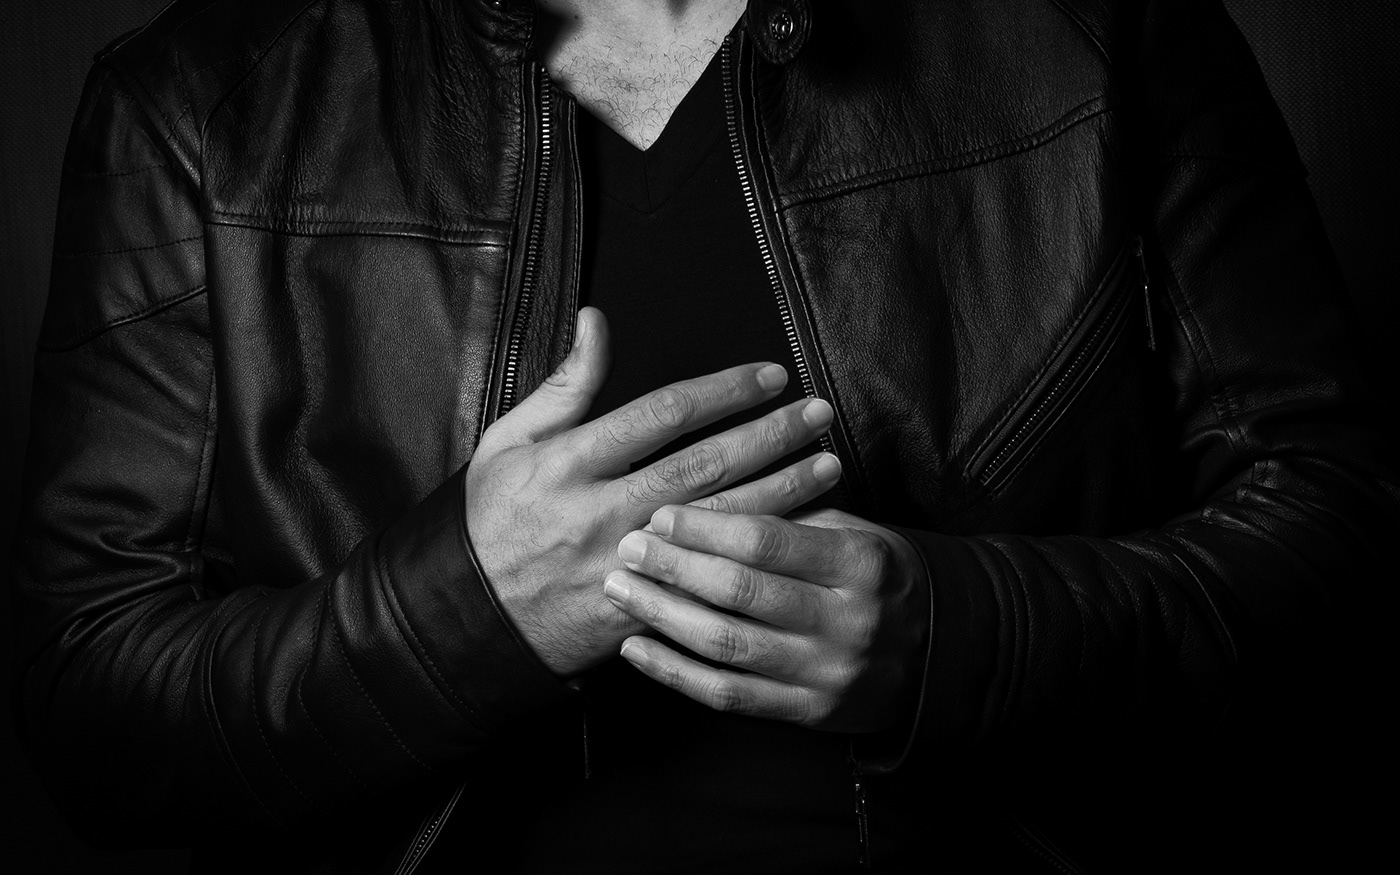 105mm black and white bw iamgns man Nikon photographer Photography  portrait self portrait